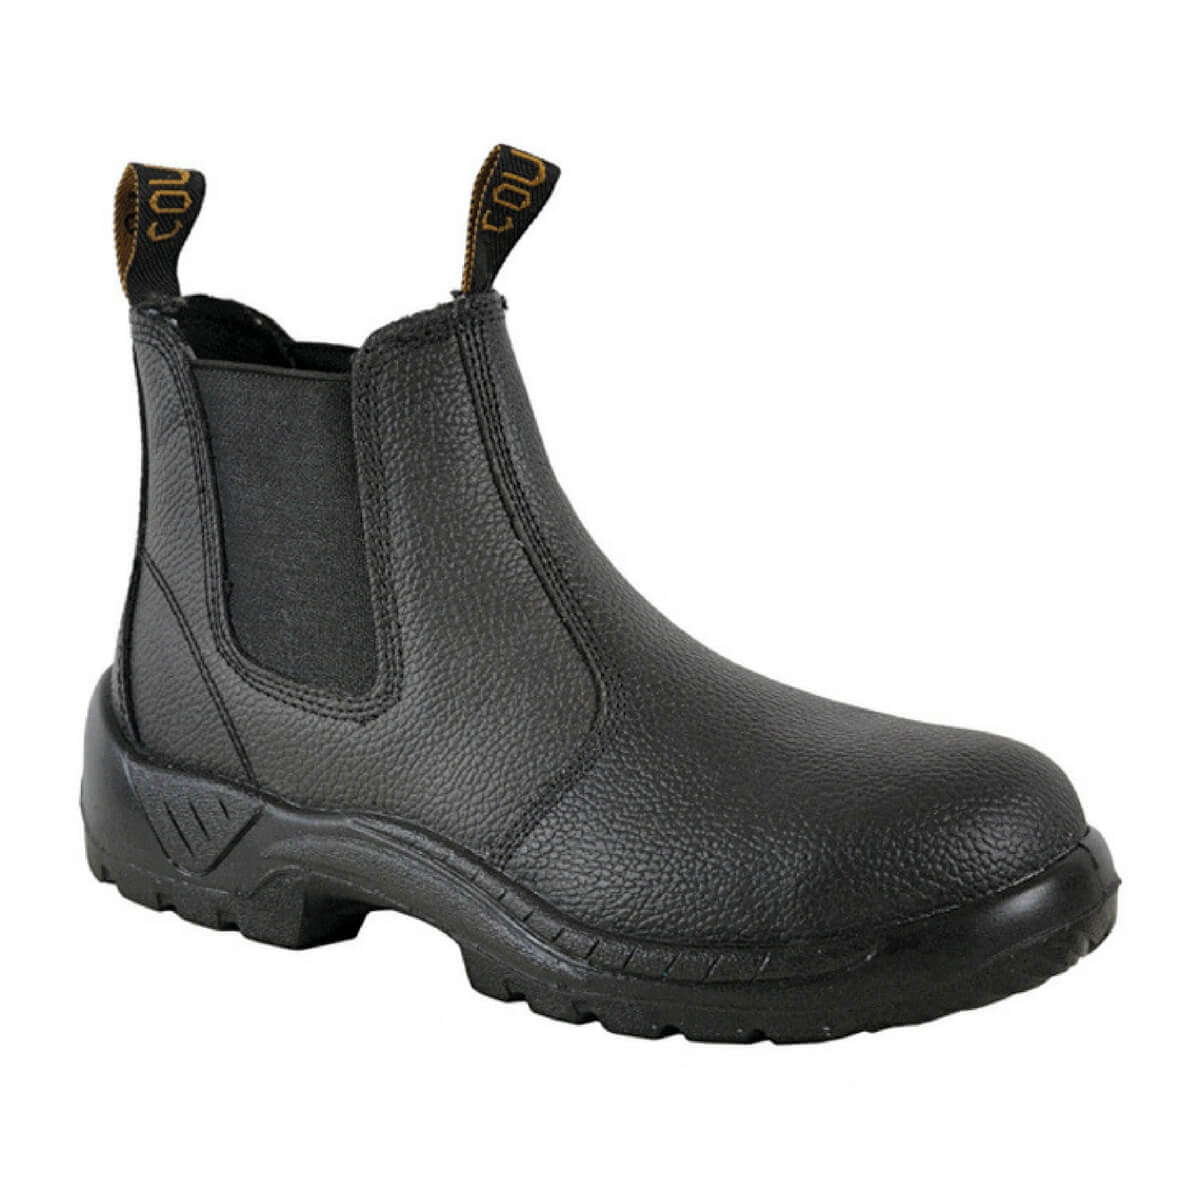 black slip on work boots